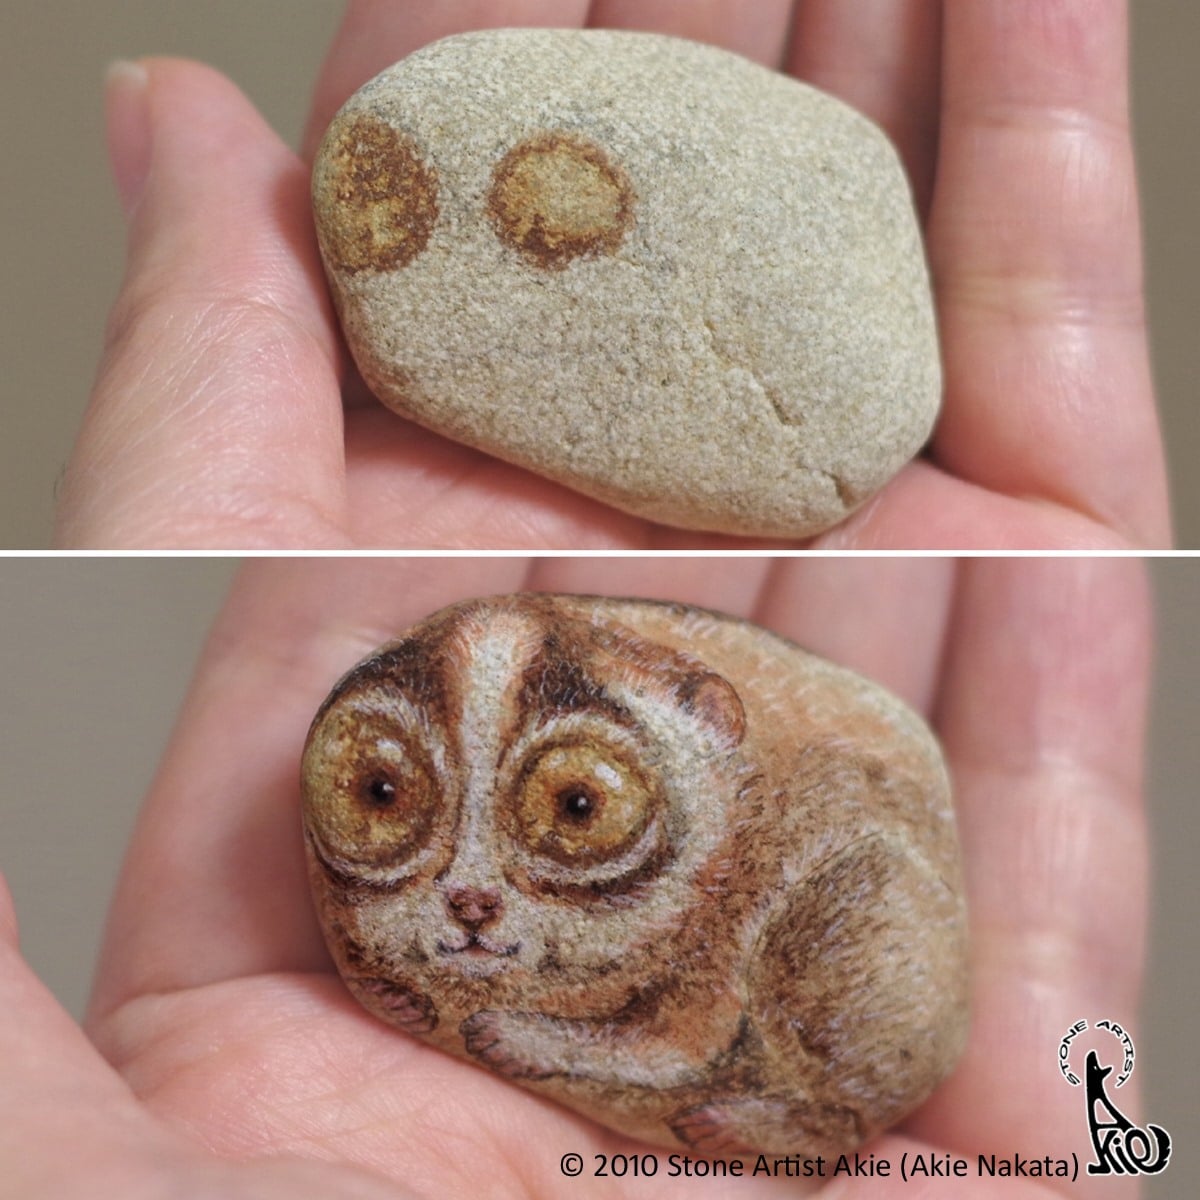 piedras pintadas de animales por Akie